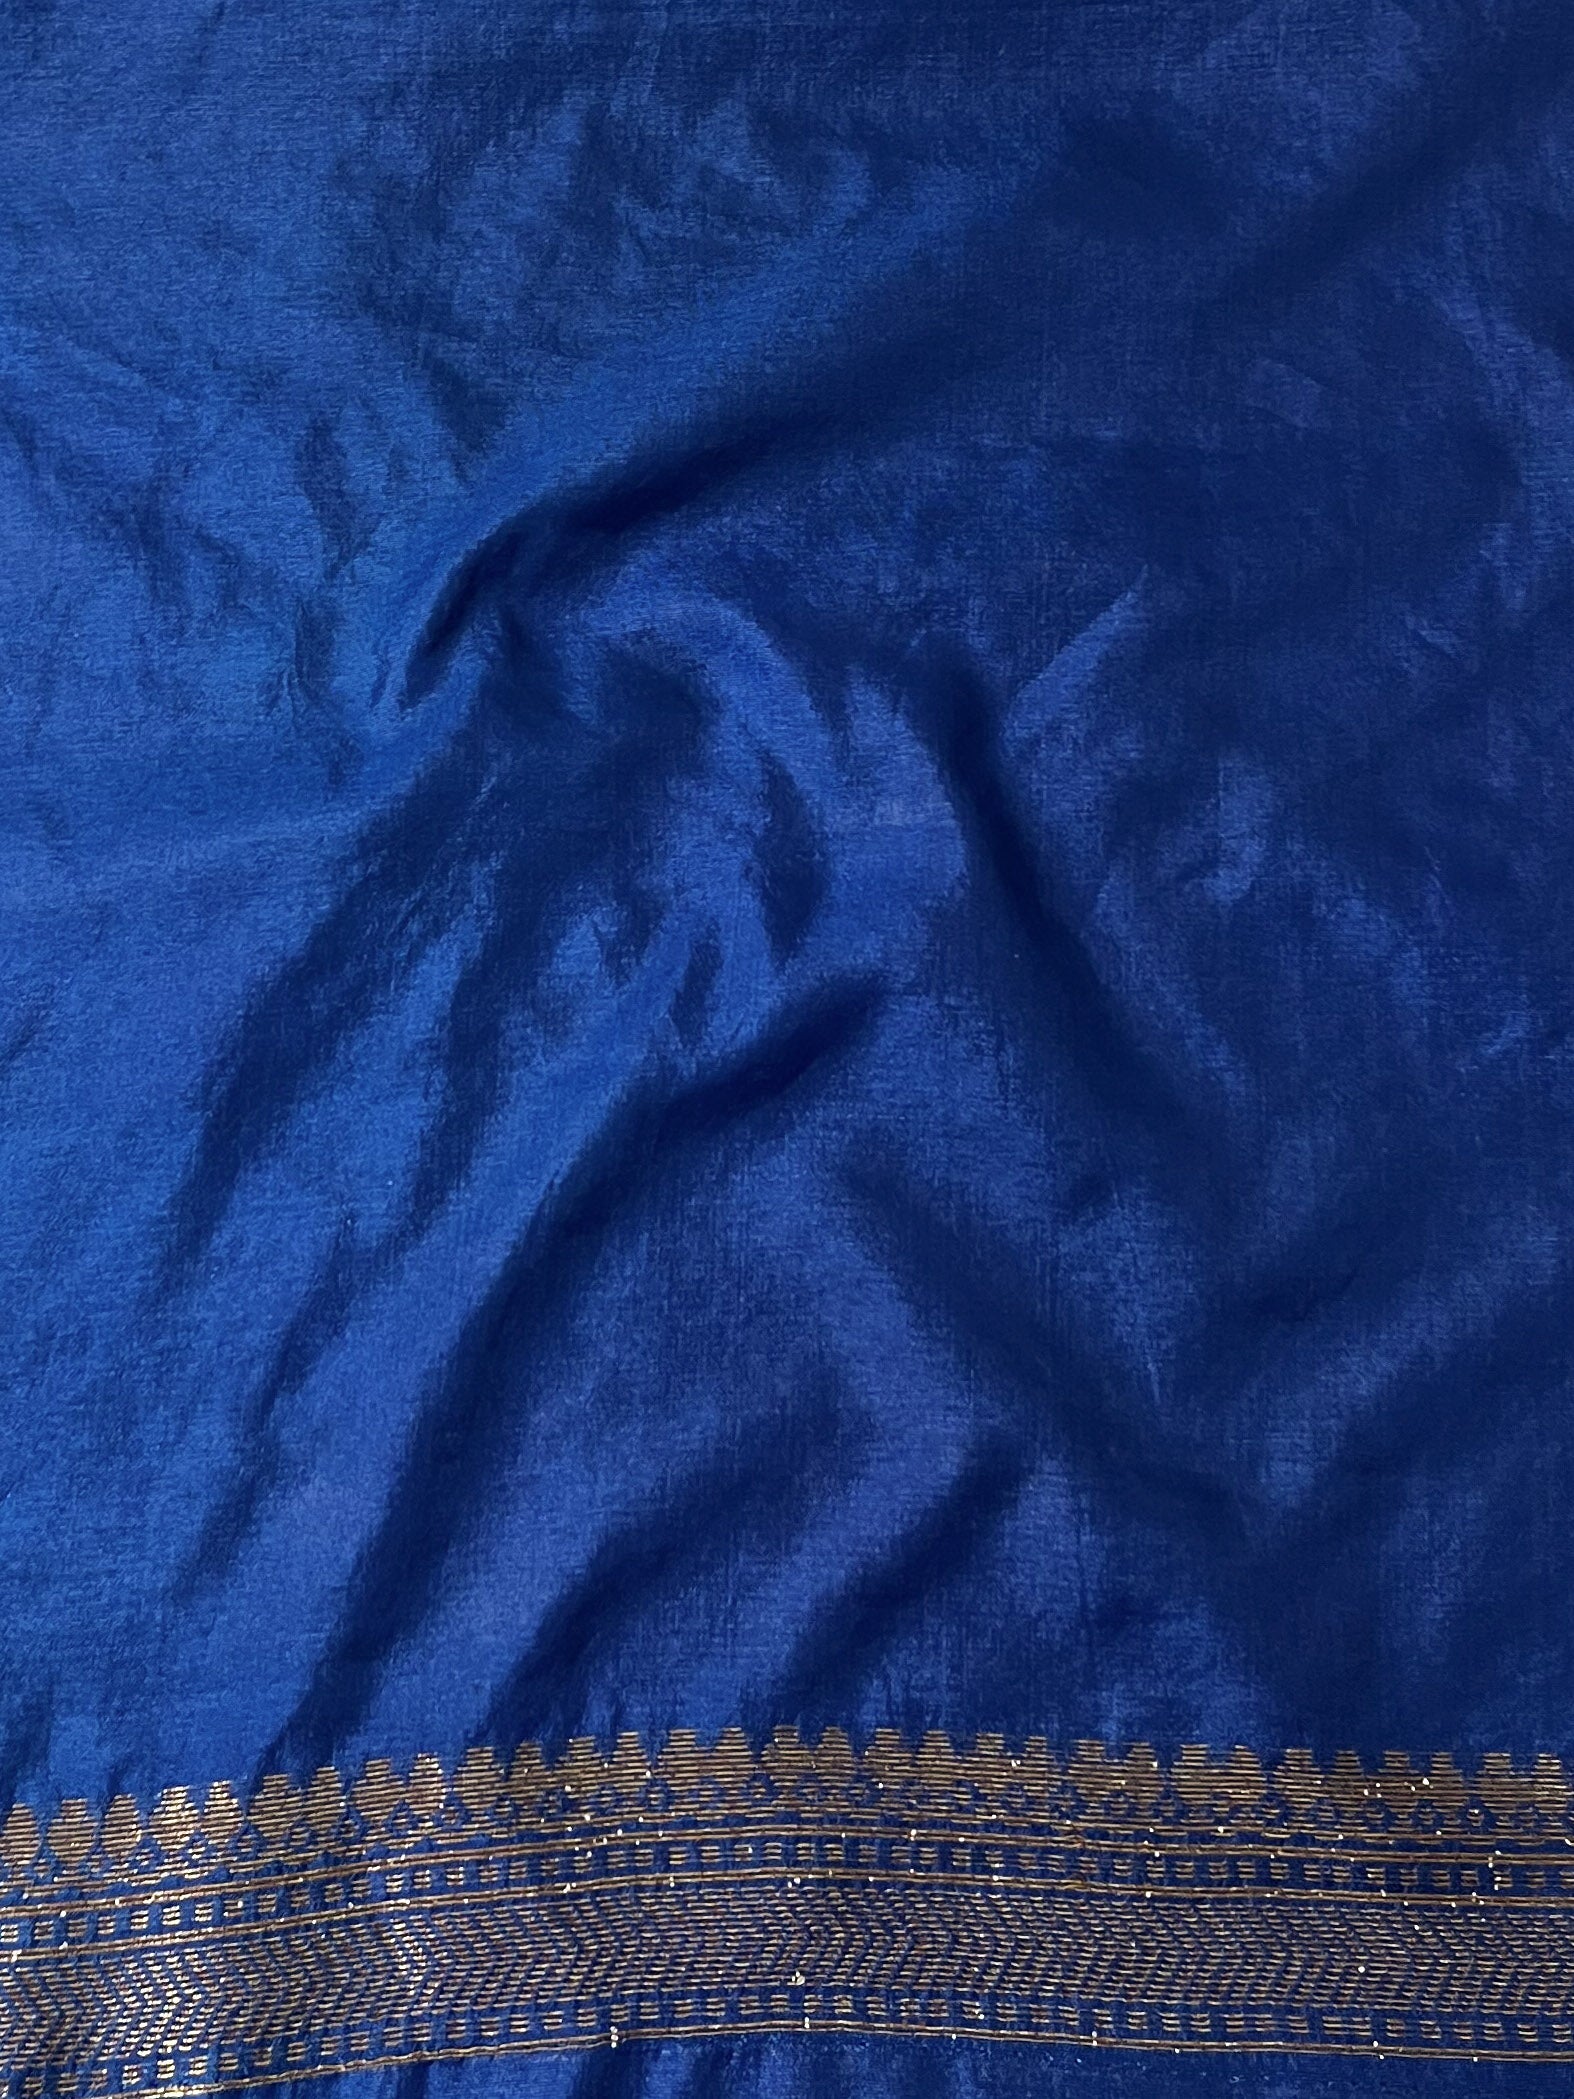 Banarasee Semi-Chiffon Saree With Antique Gold Zari Work-Cobalt Blue